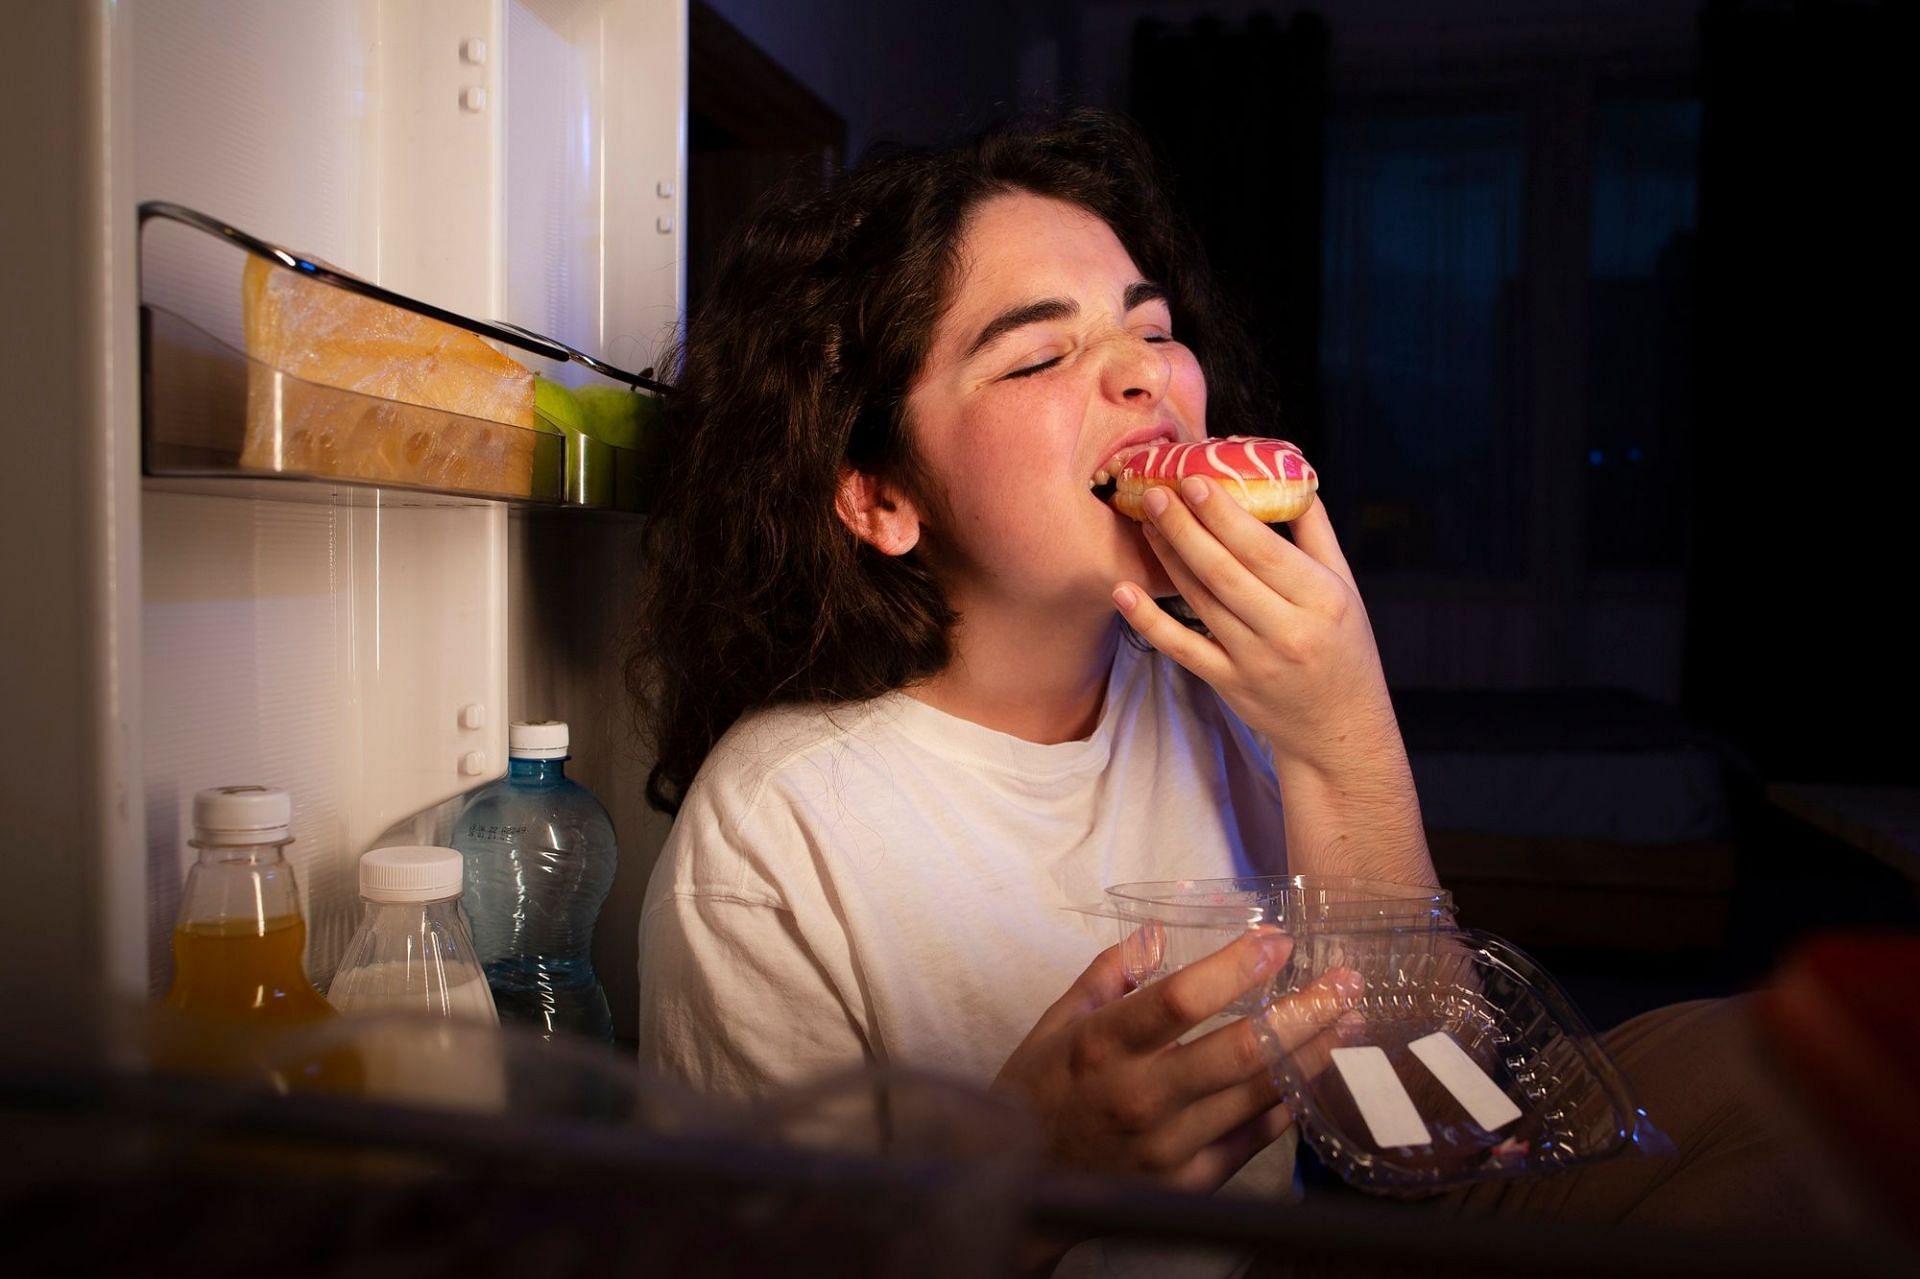 Common causes of binge eating. (Image via Freepik)